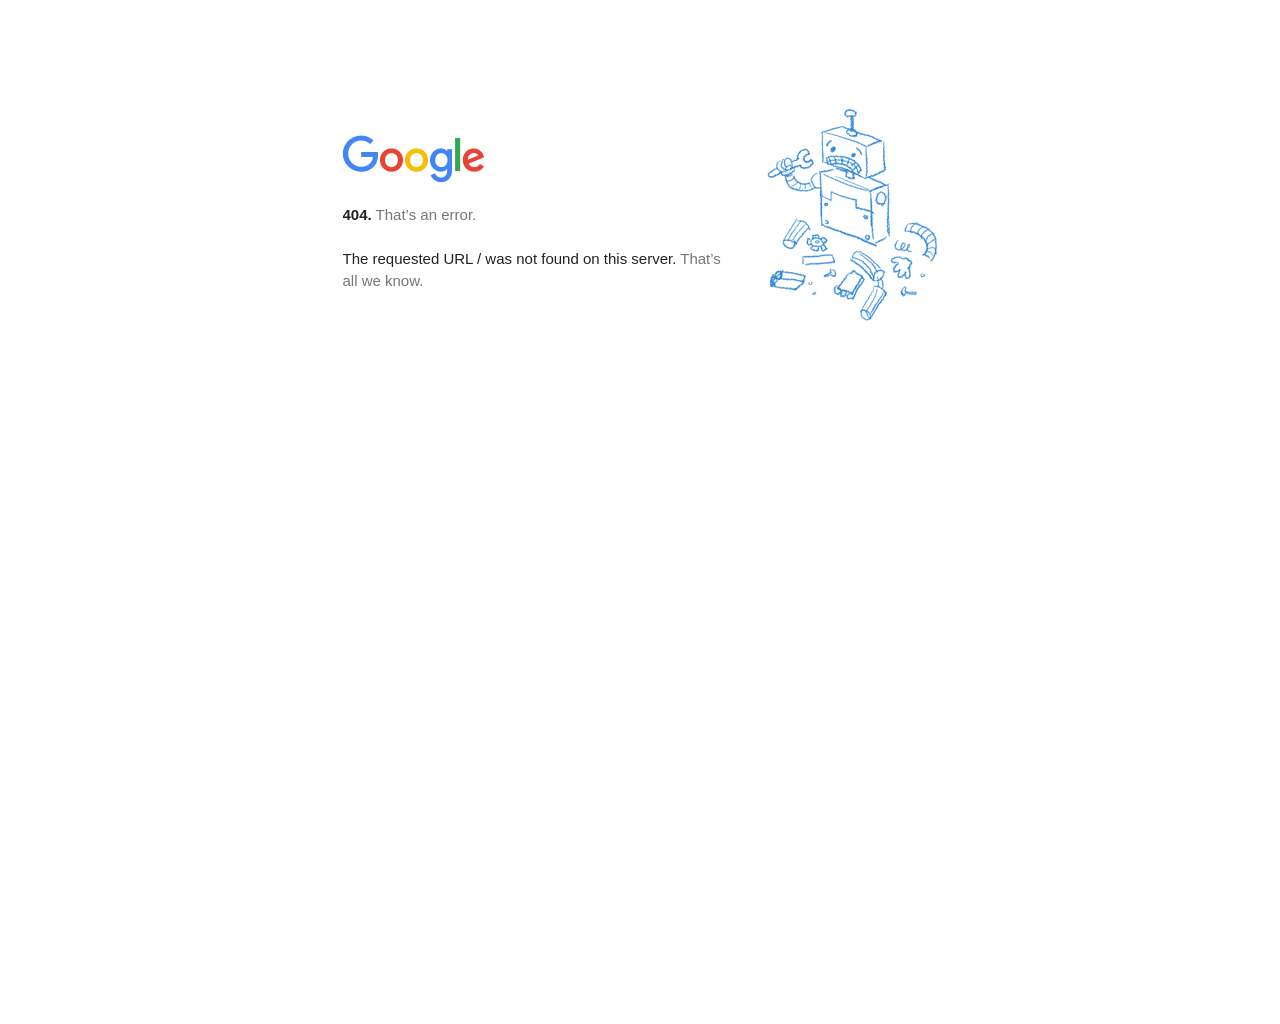 googleapps.com